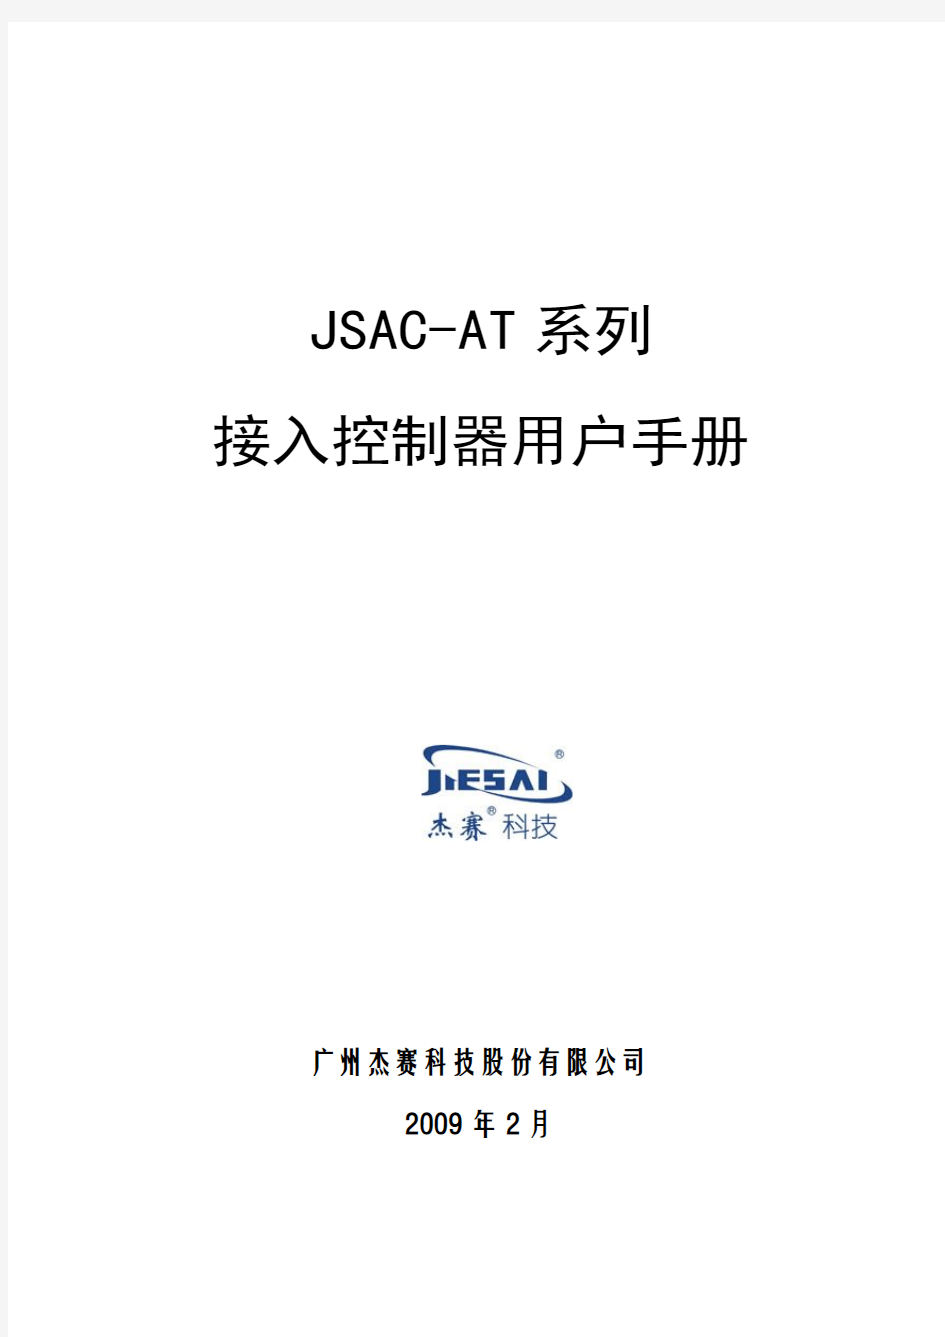 JSAC-AT系列接入控制器(AC)用户手册  V1.5